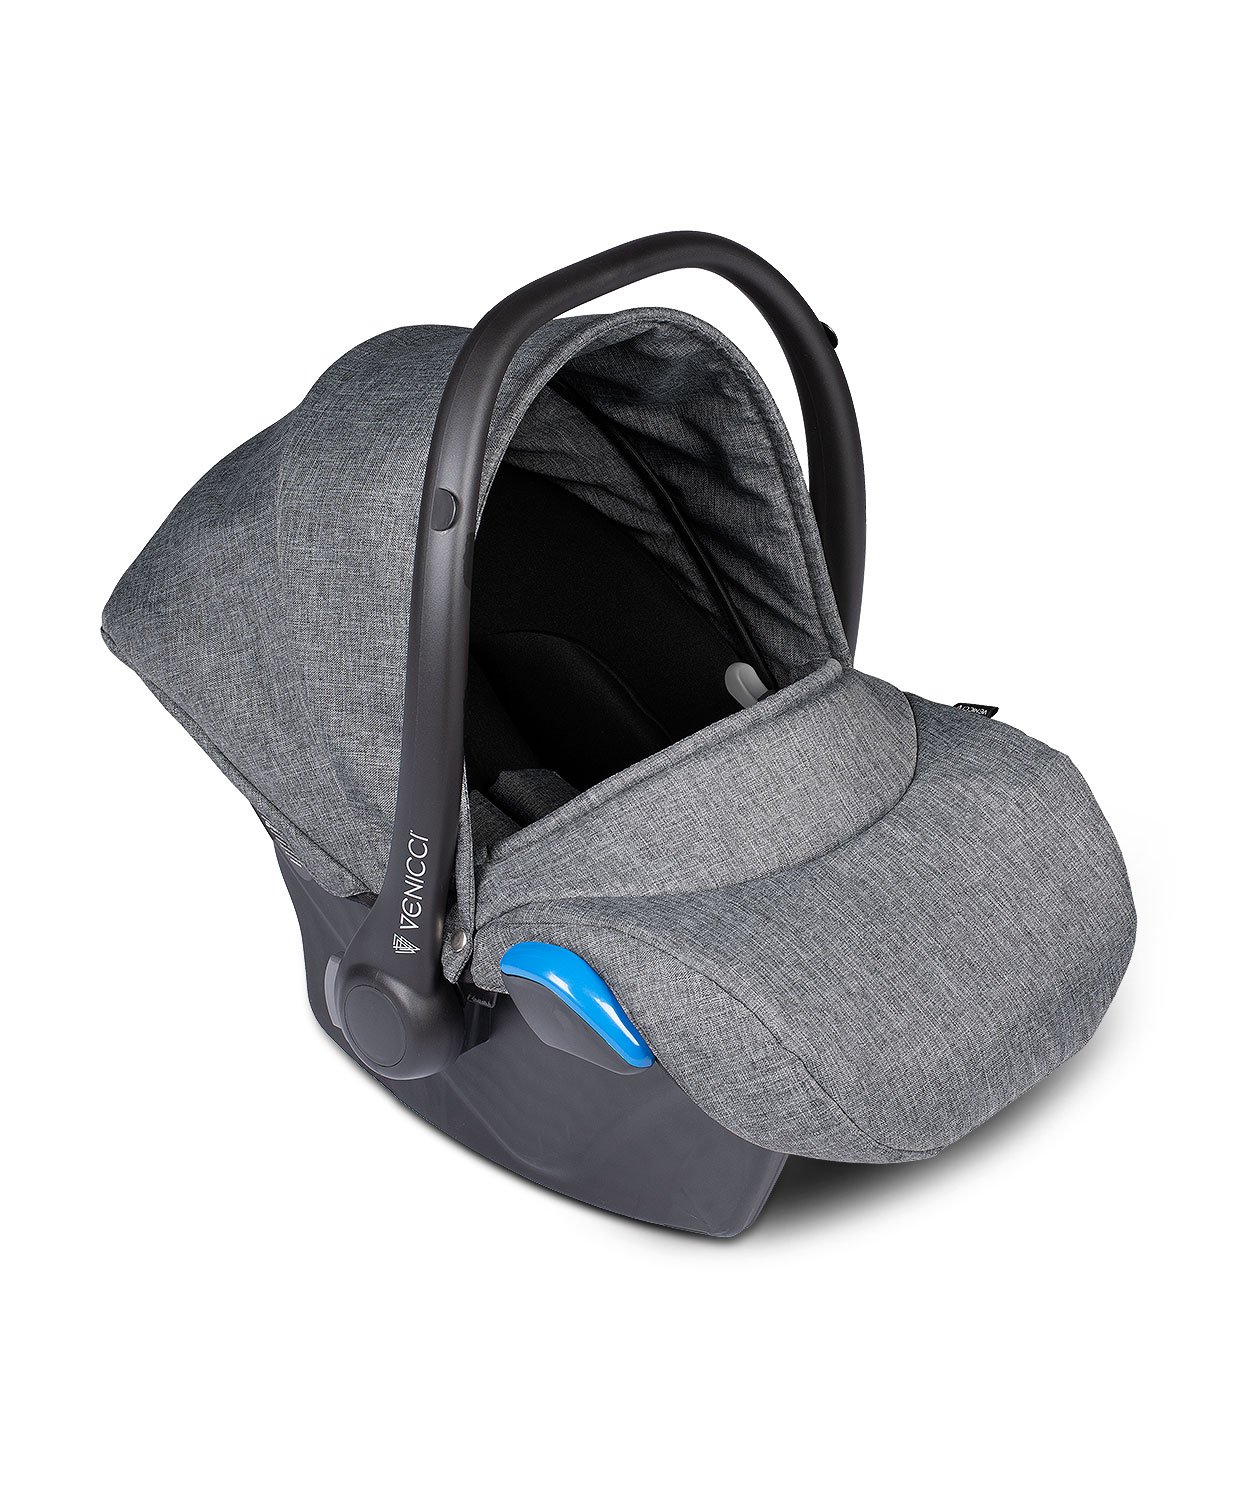 Venicci Car Seat Denim Grey - How To Install Venicci Baby Car Seat With Seatbelt